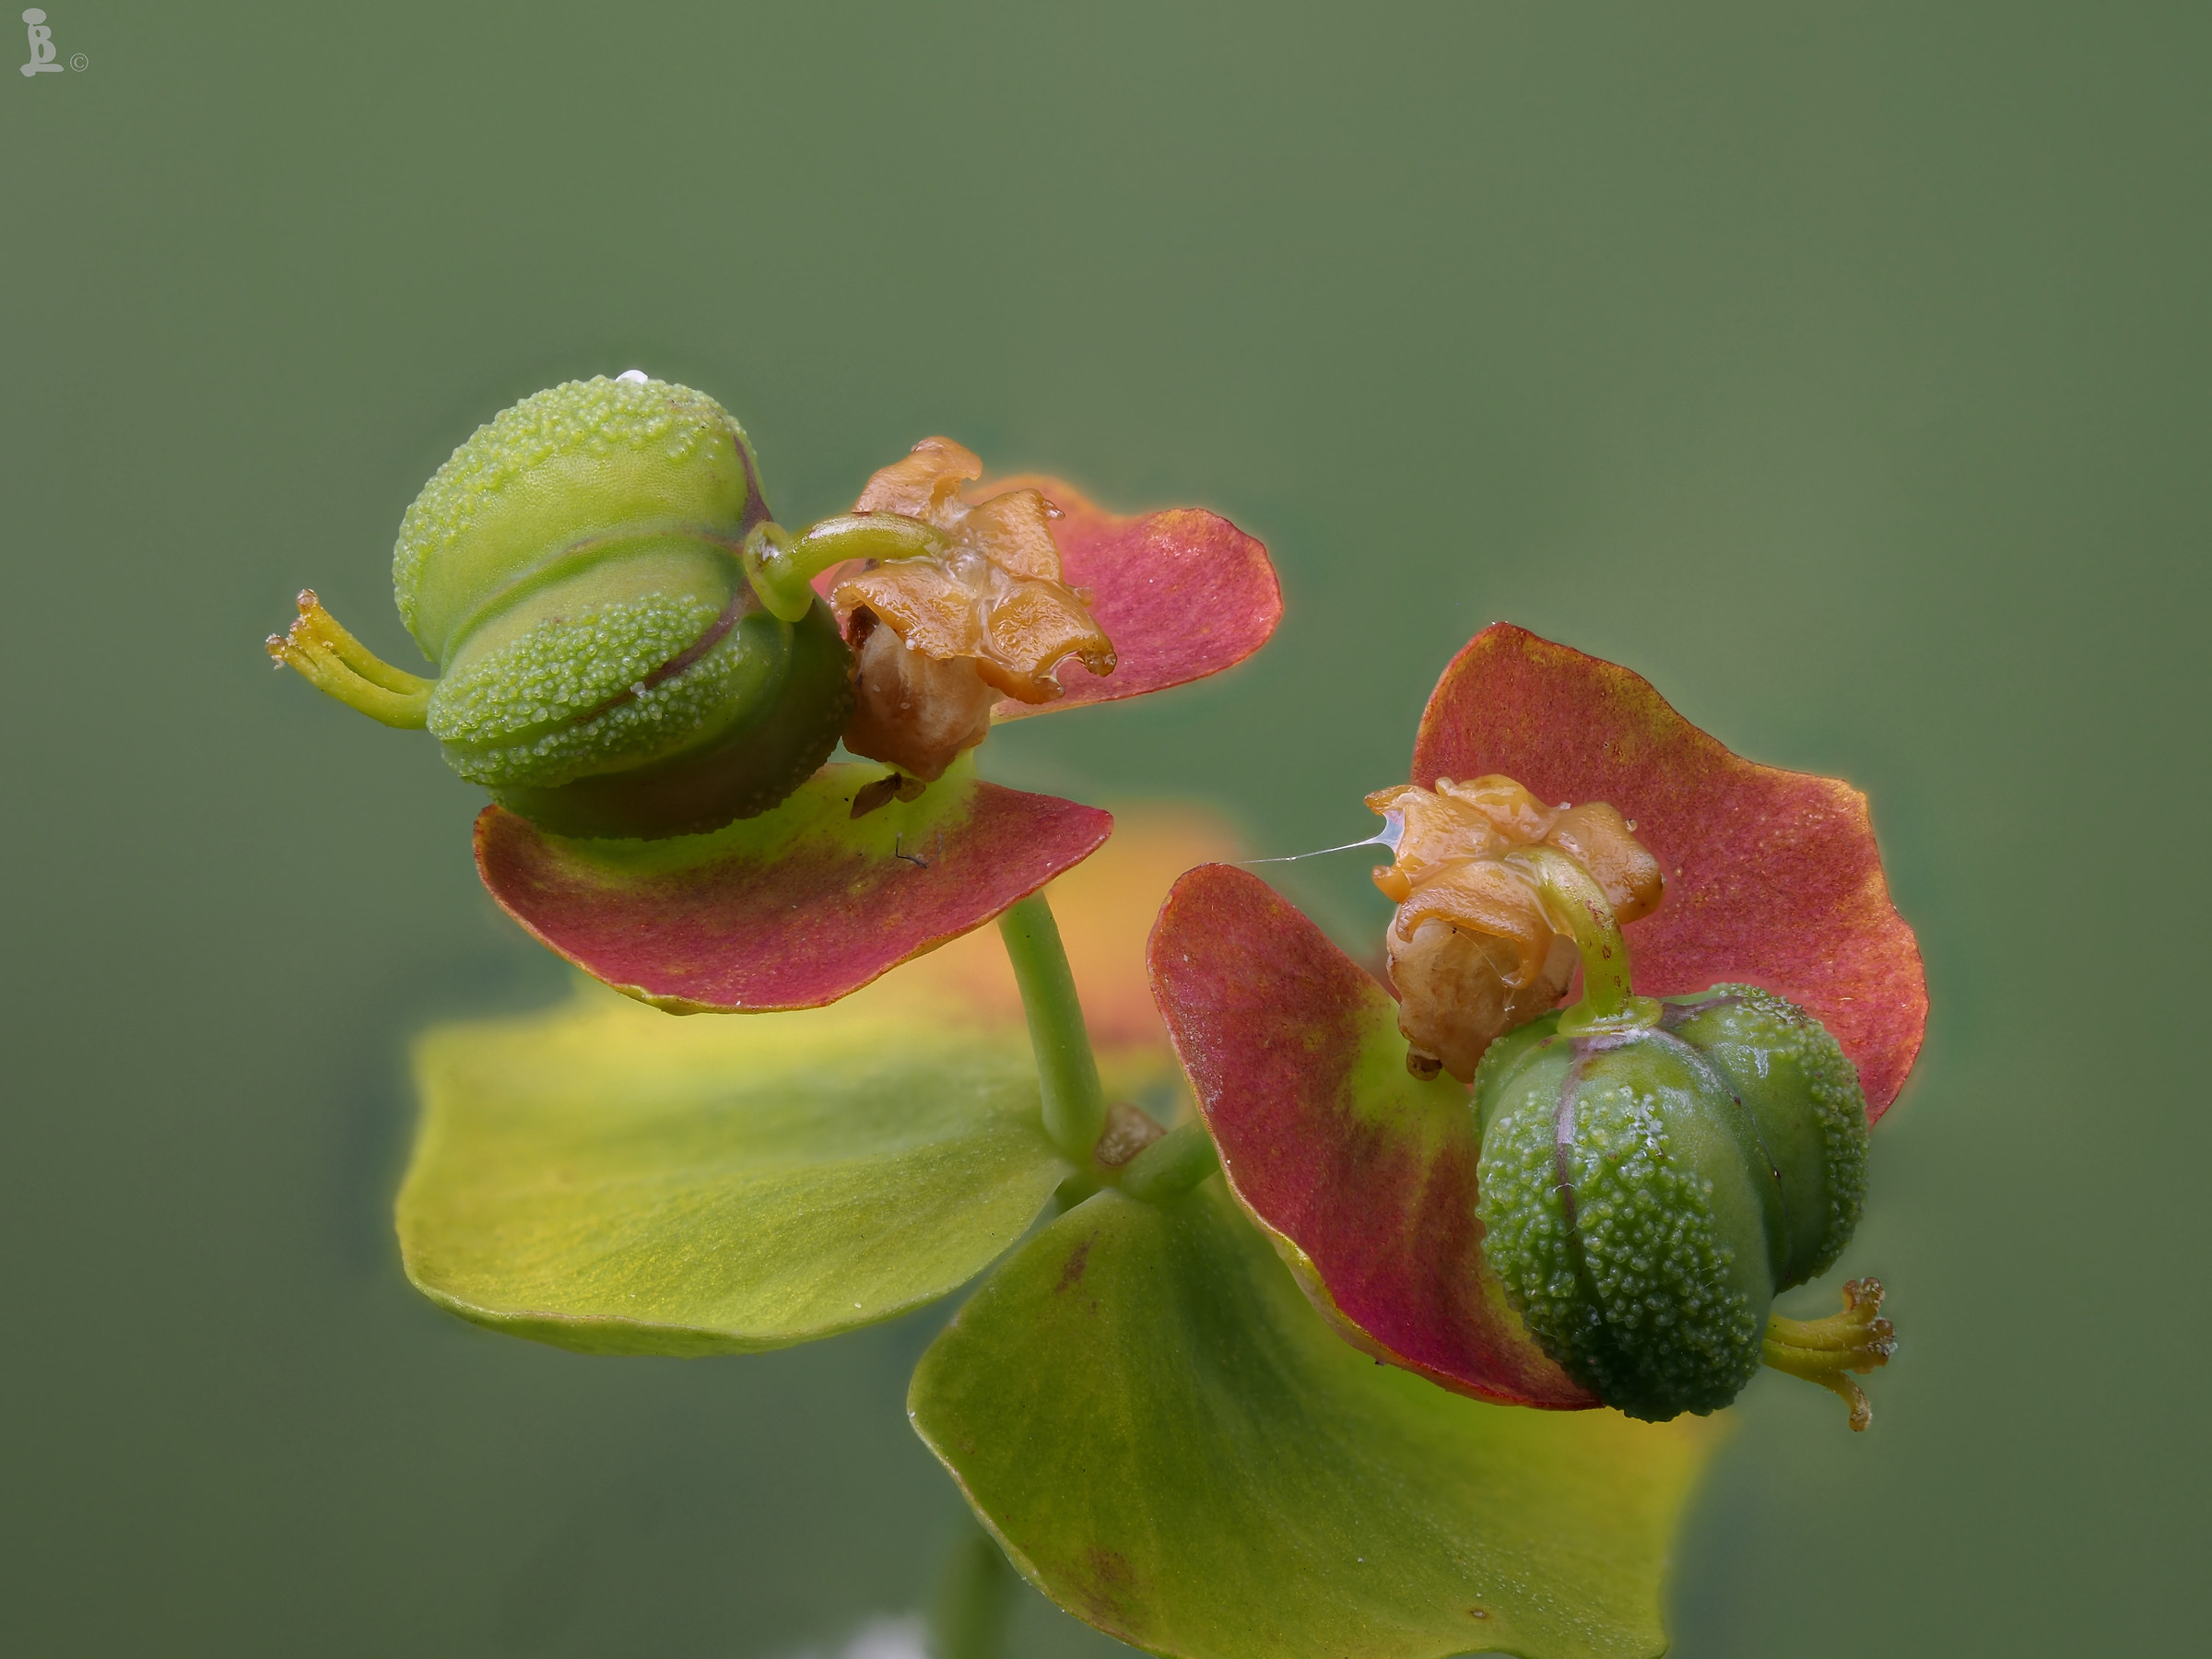 Euphorbia cyparissias...